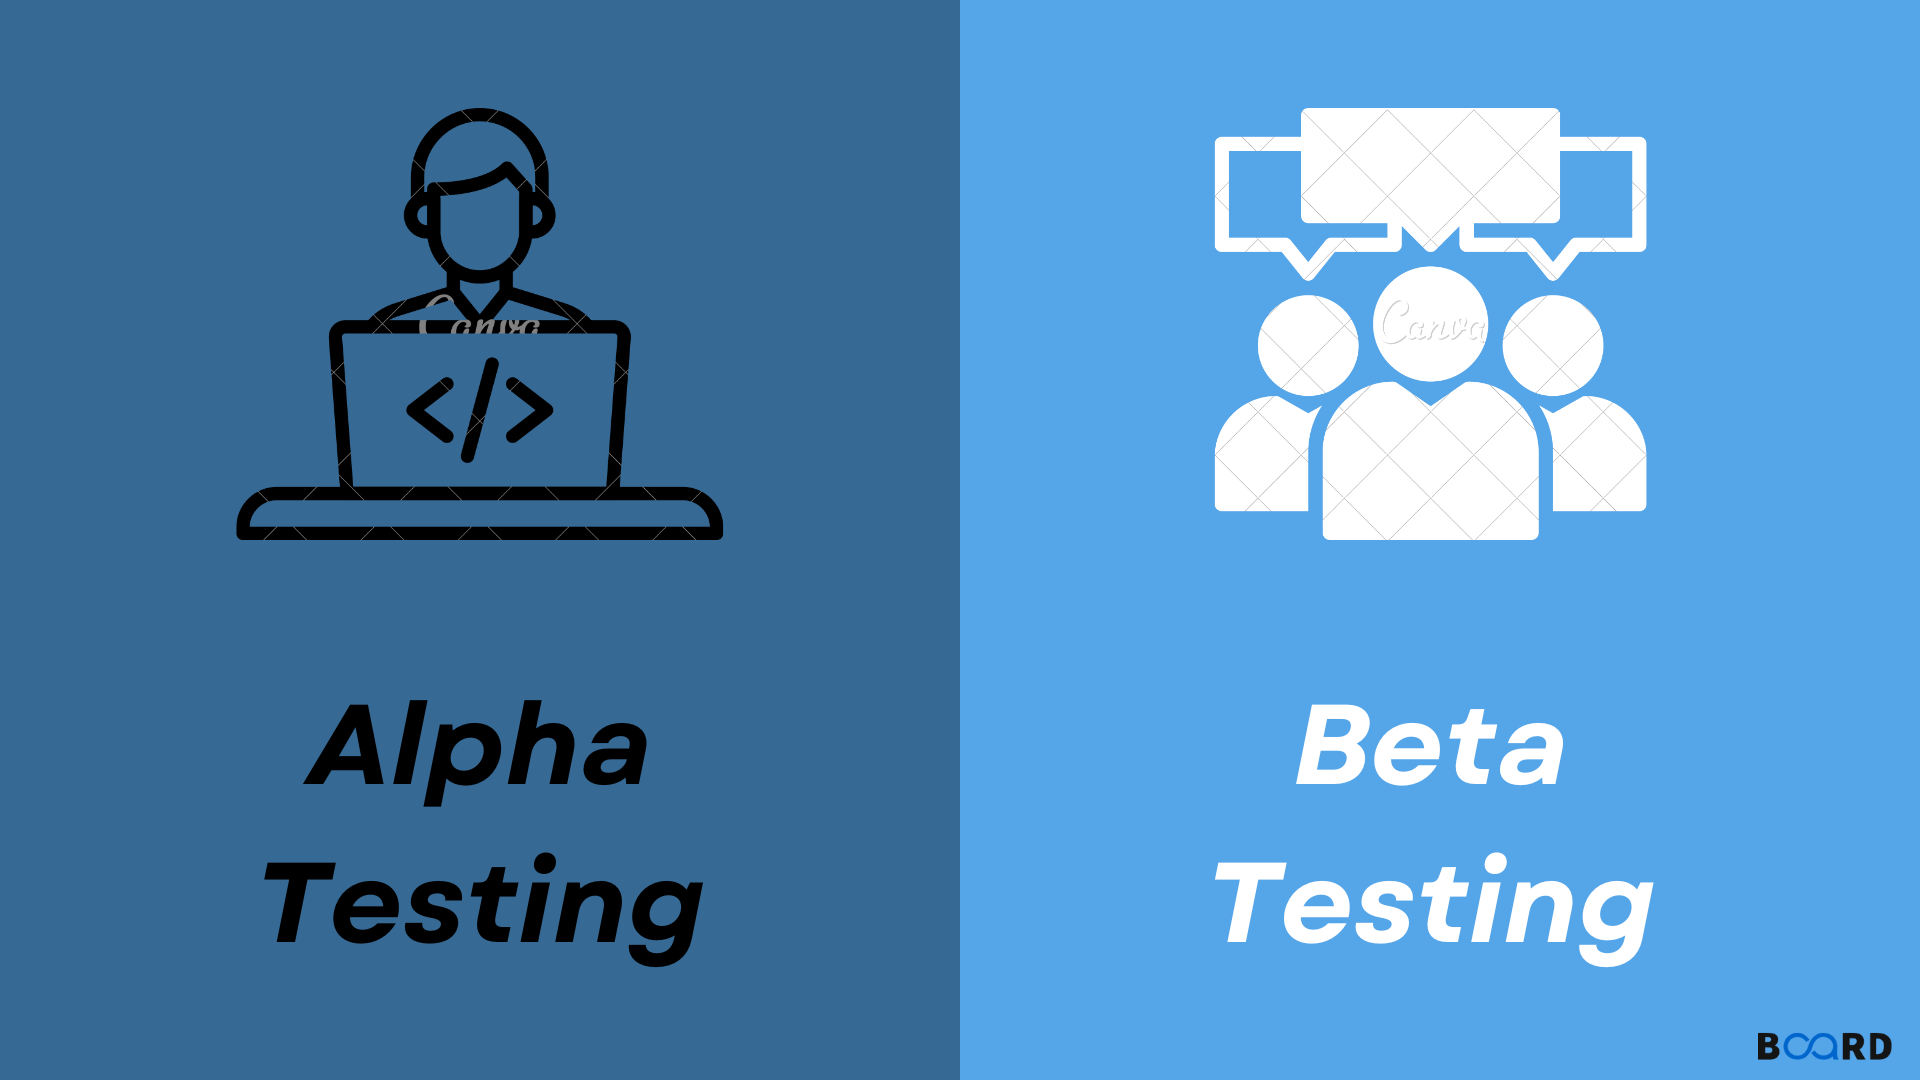 Alpha and Beta testing